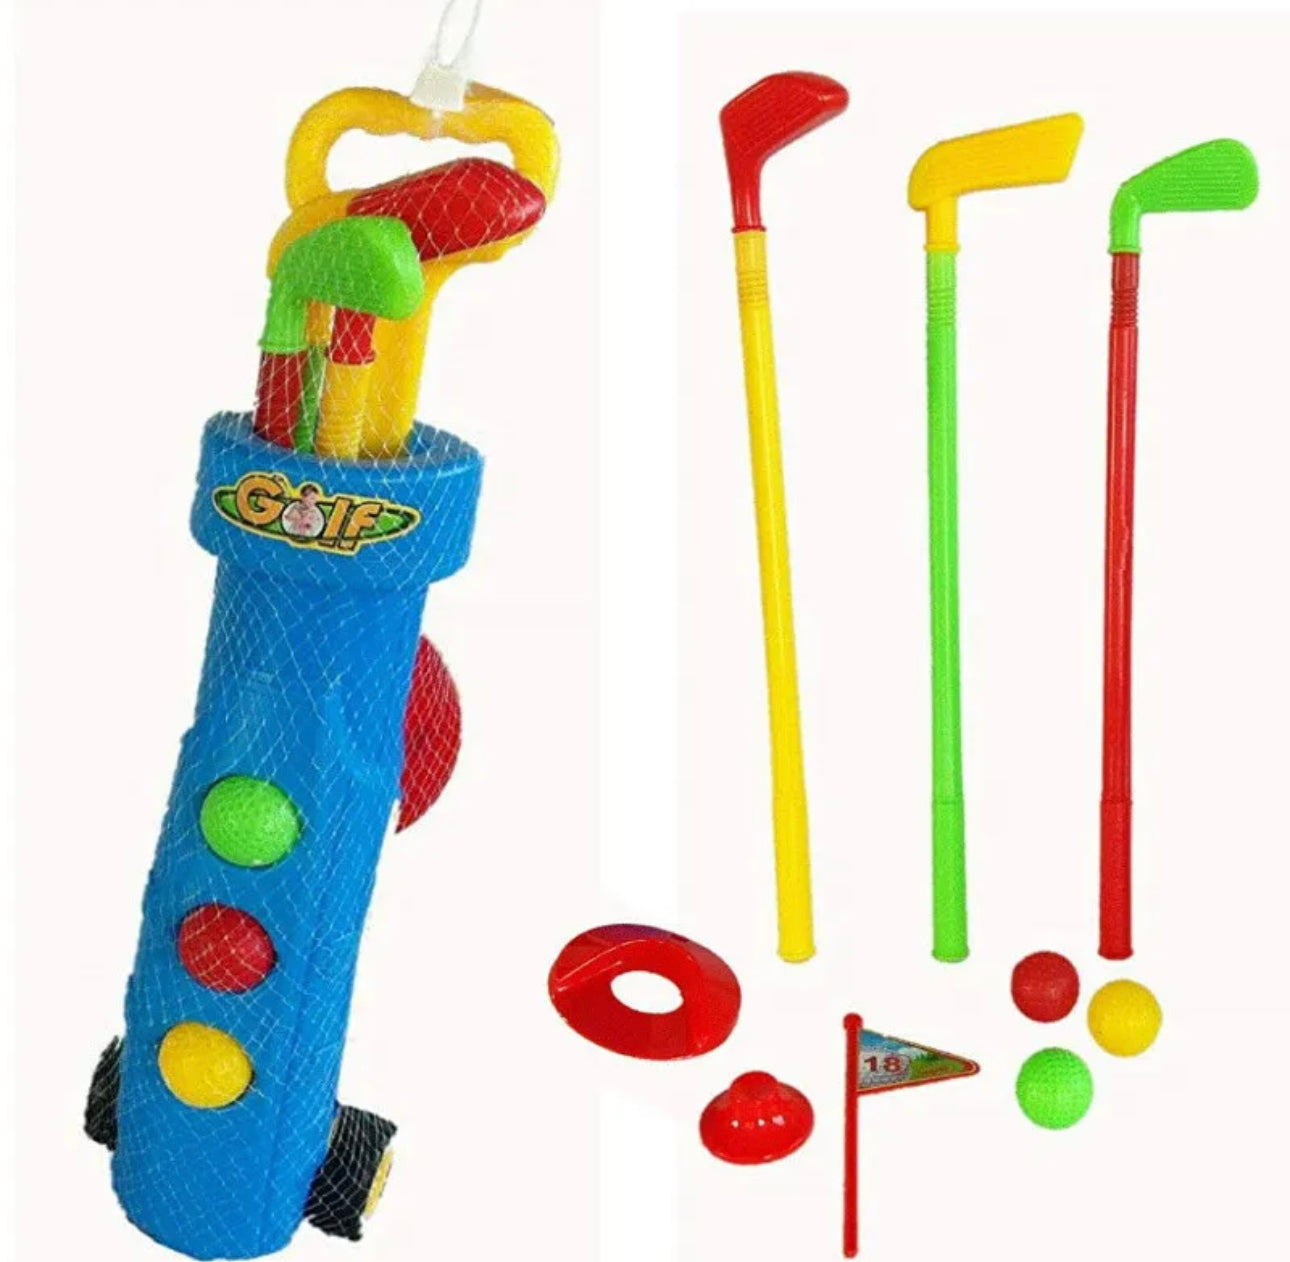 Children’s Play Golf Set